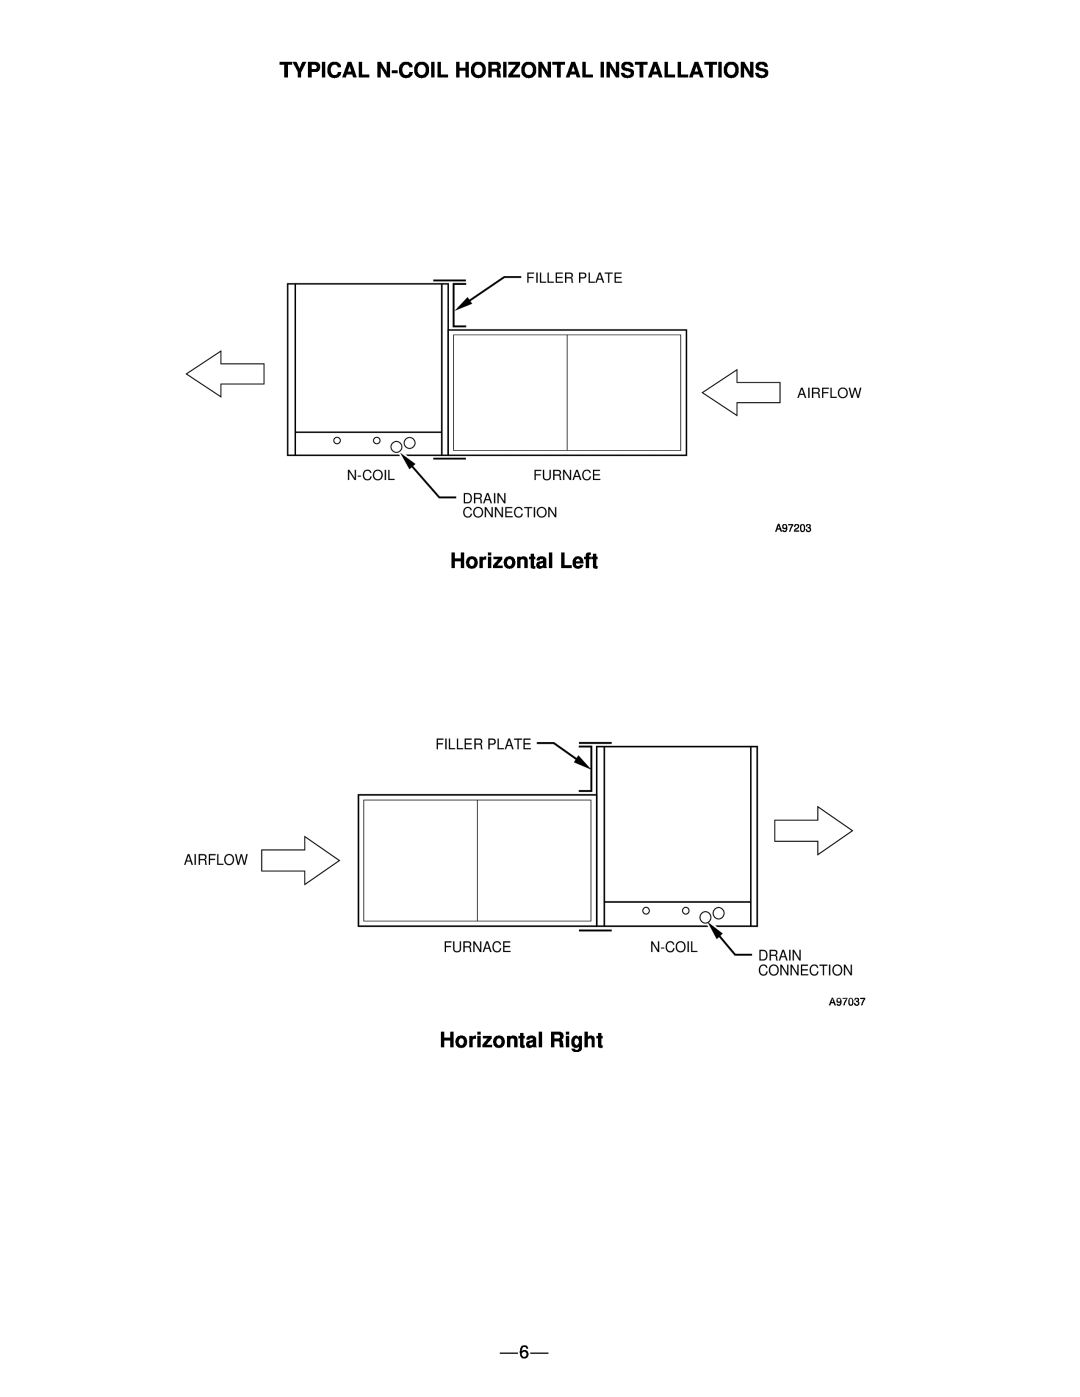 Bryant CK3B manual Typical N-Coilhorizontal Installations, Horizontal Left, Horizontal Right 